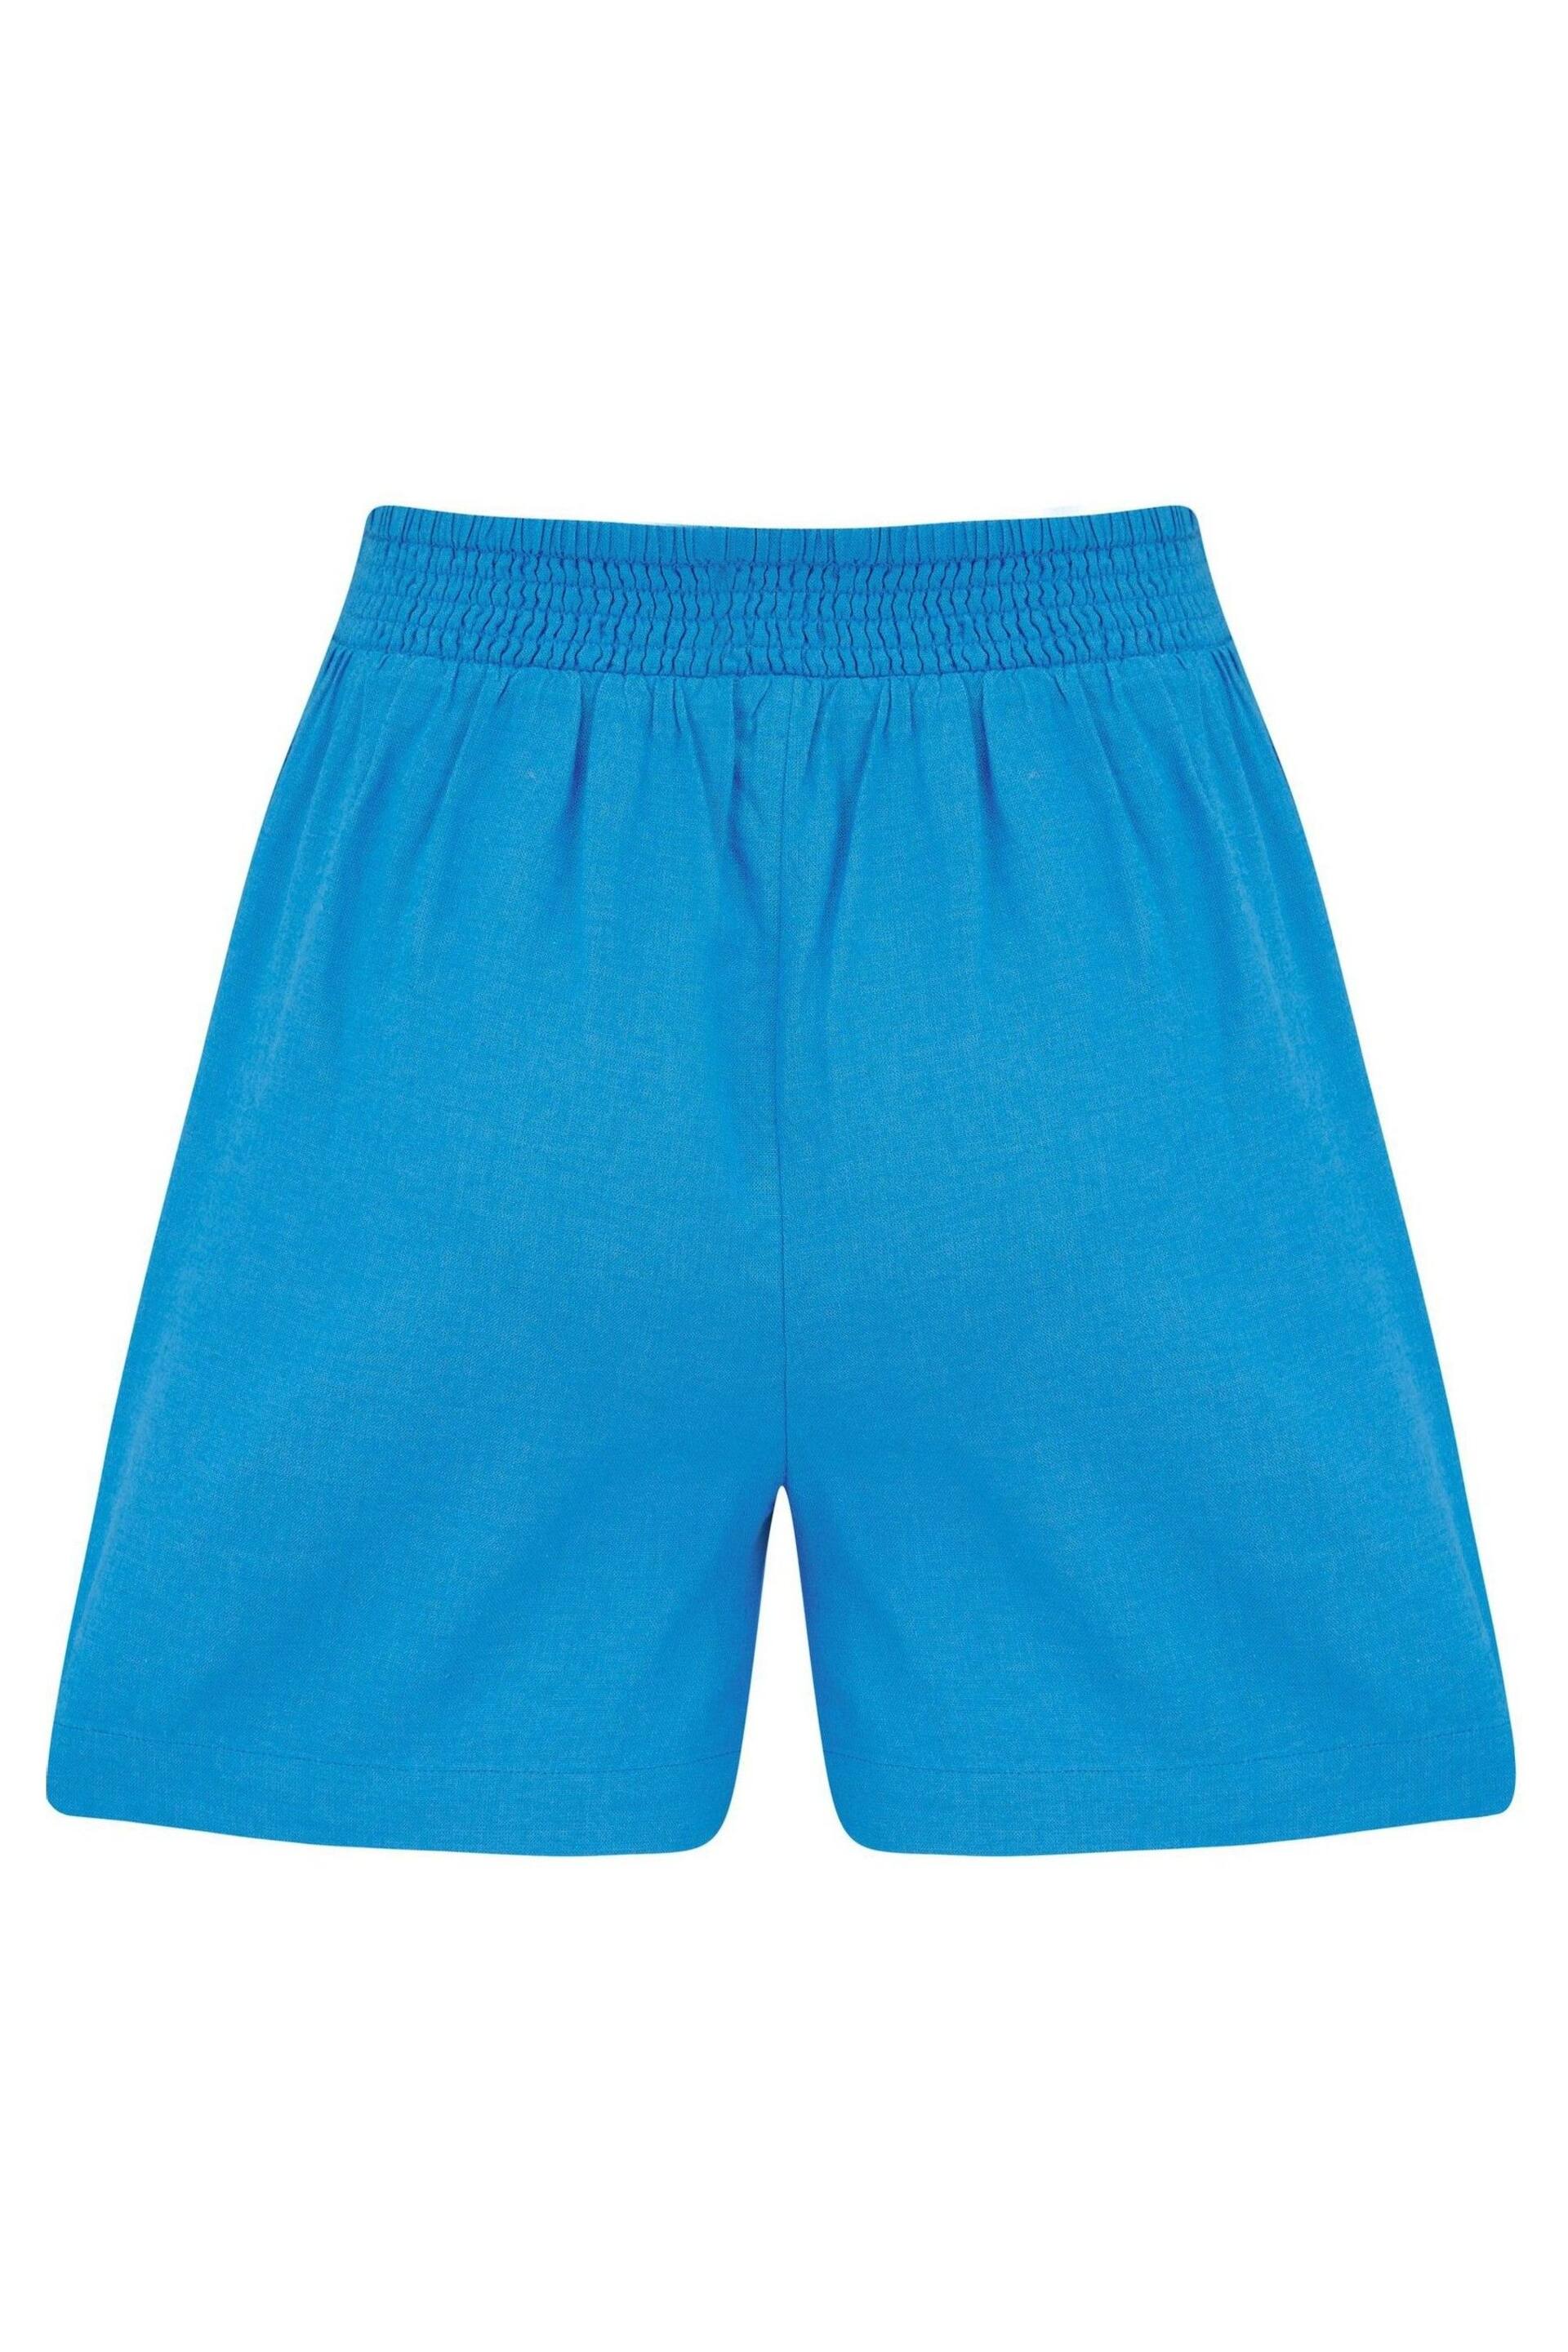 Pour Moi Blue Bree High Waist Linen Blend Elasticated Shorts - Image 3 of 4